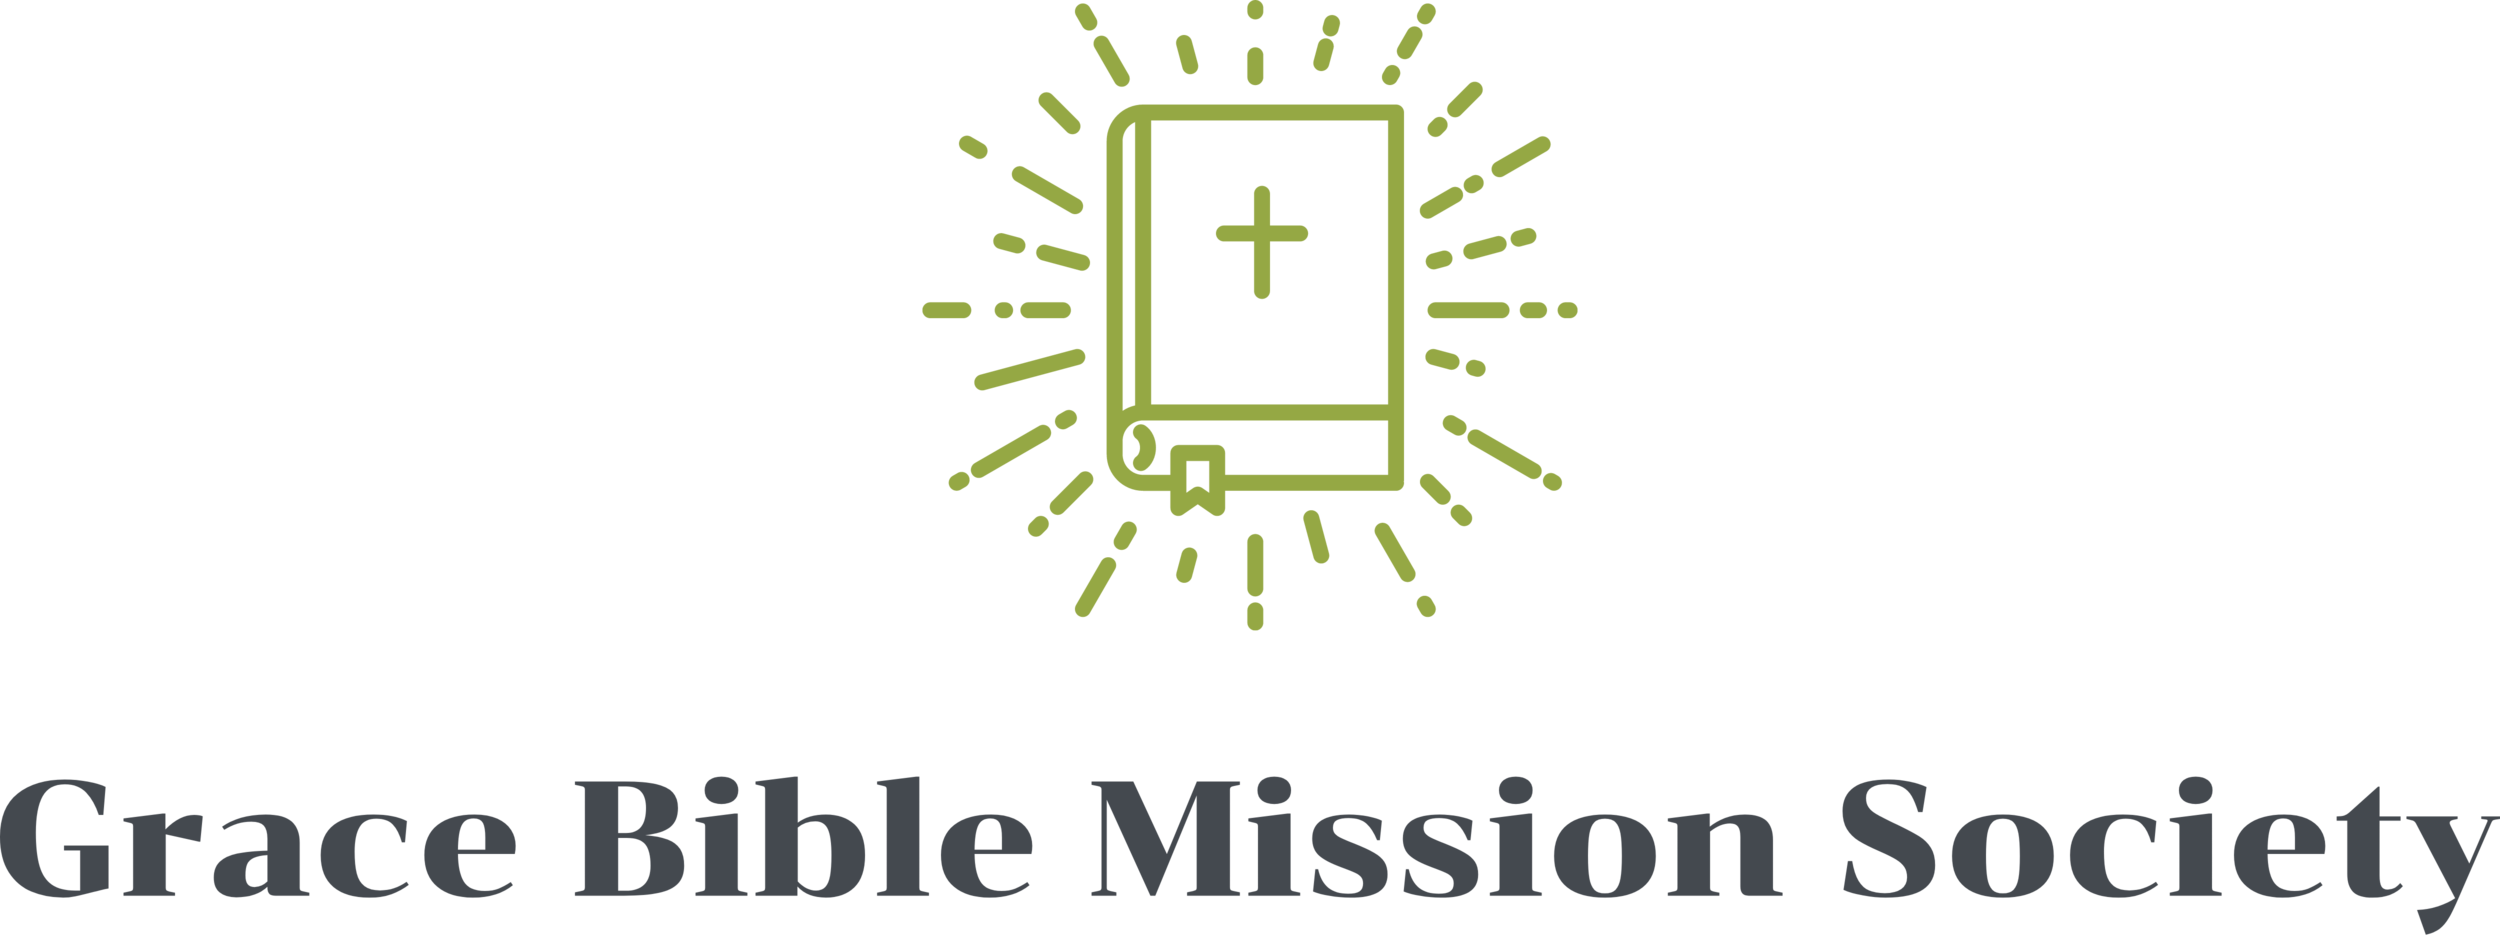 Grace Bible Mission Society